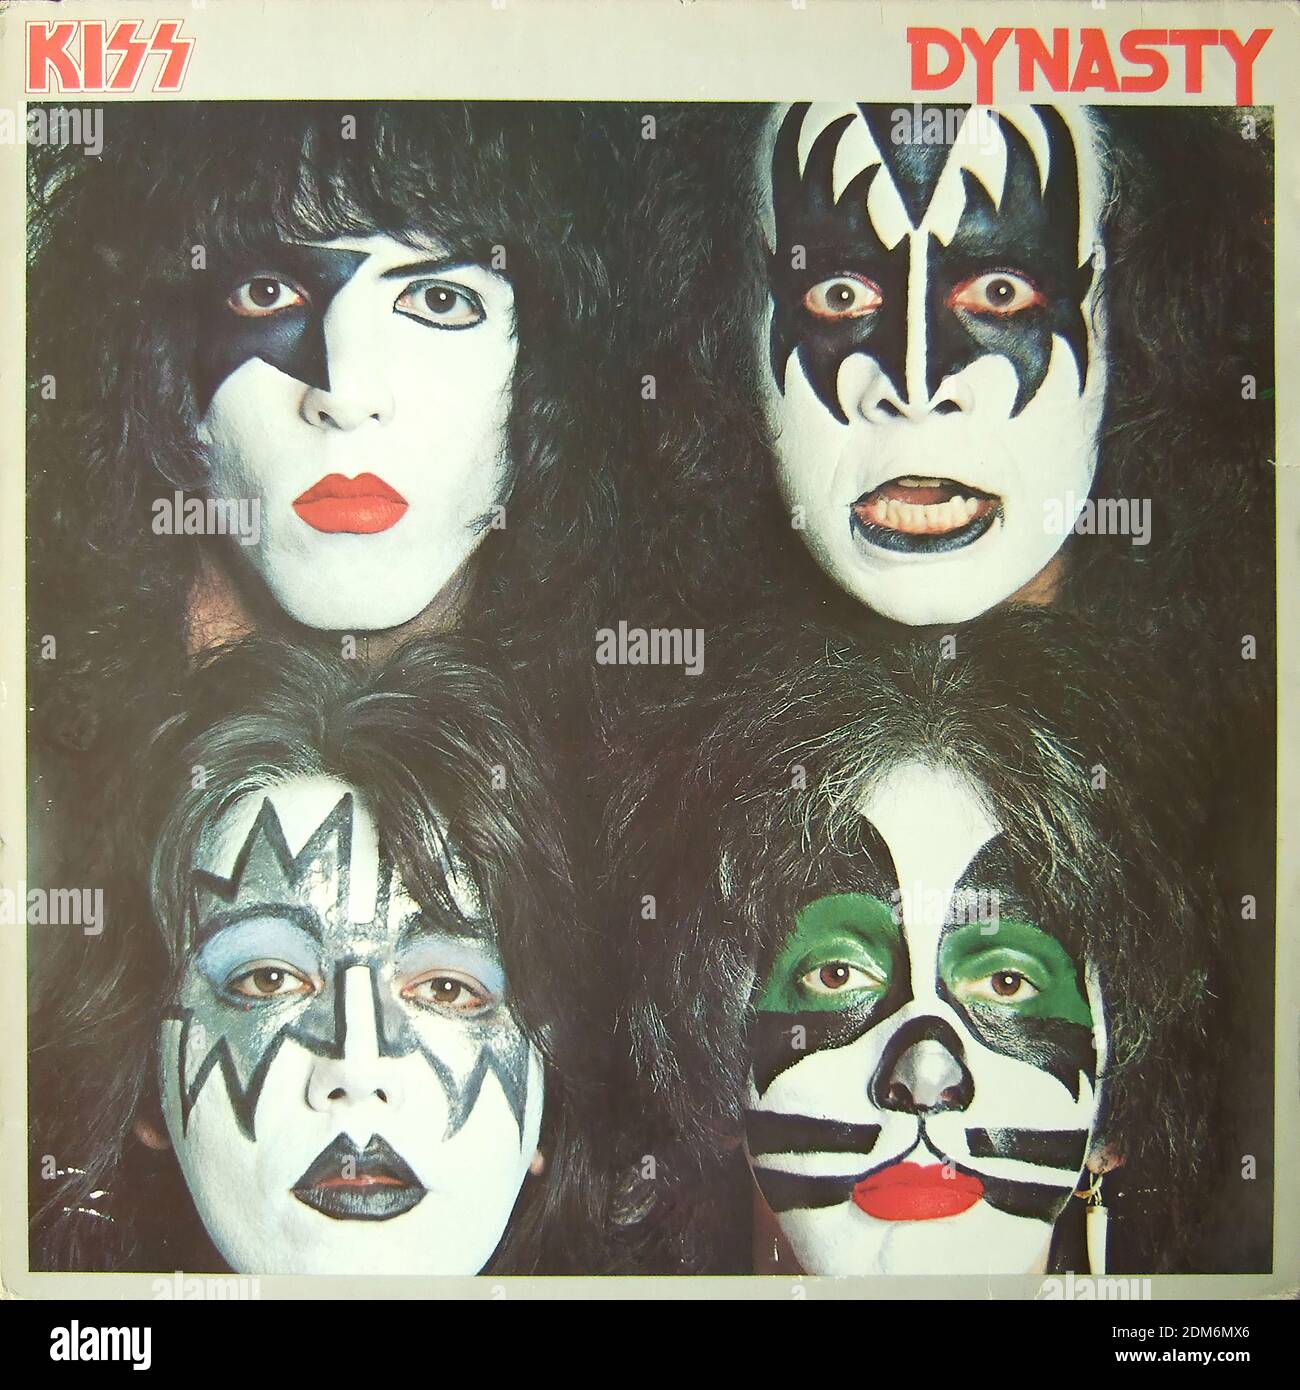 KISS - Dynasty - Vintage vinyle album couverture Photo Stock - Alamy